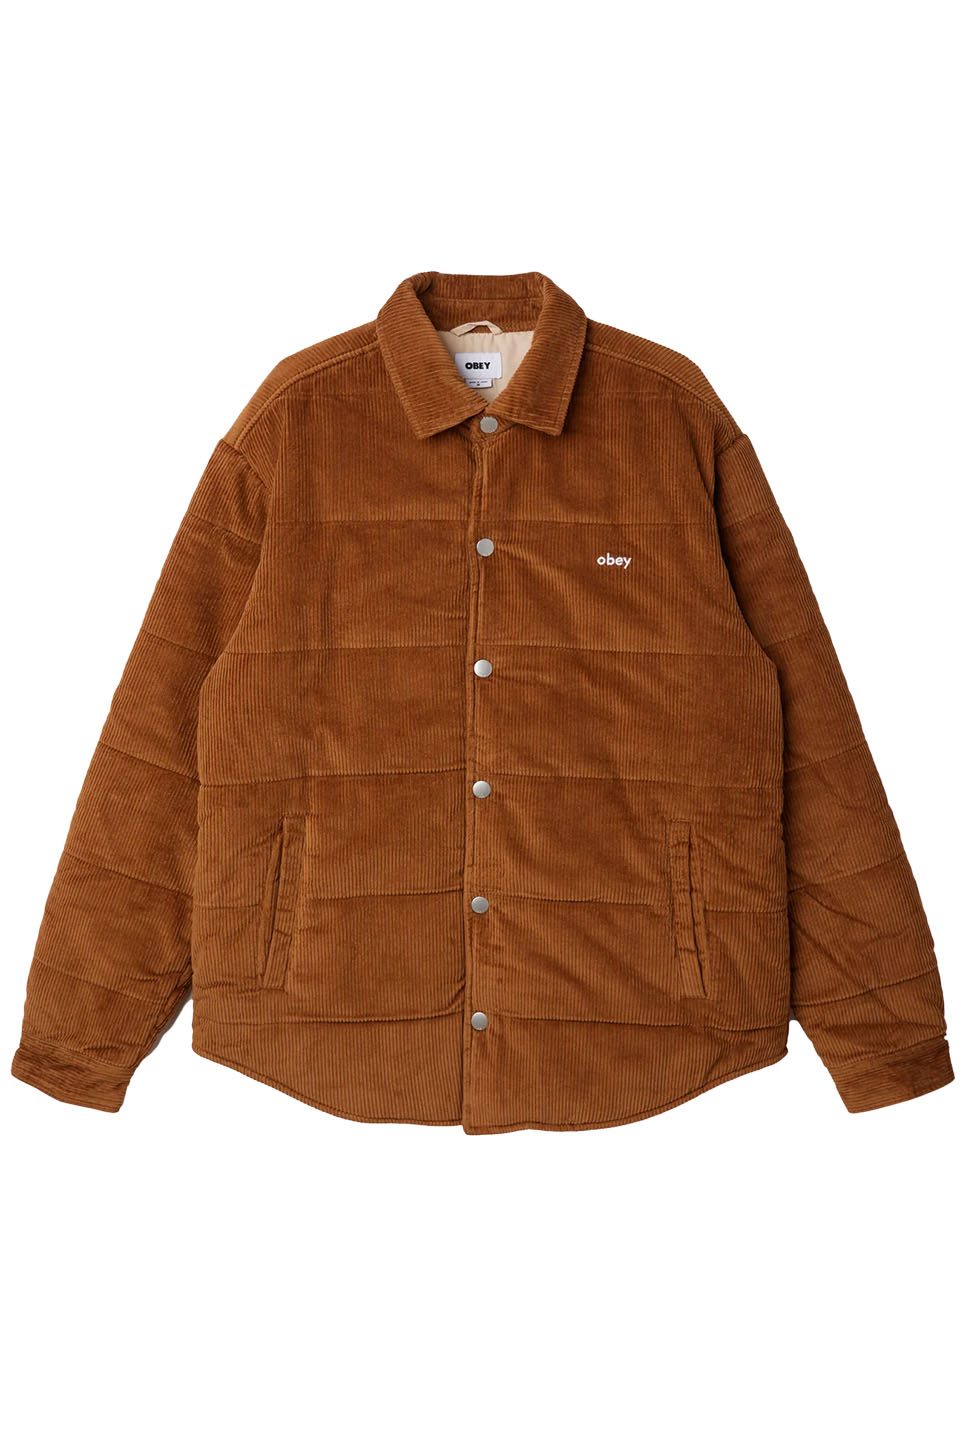 Obey - Grand Cord Shirt Jacket - Catechu Wood - Flatlay